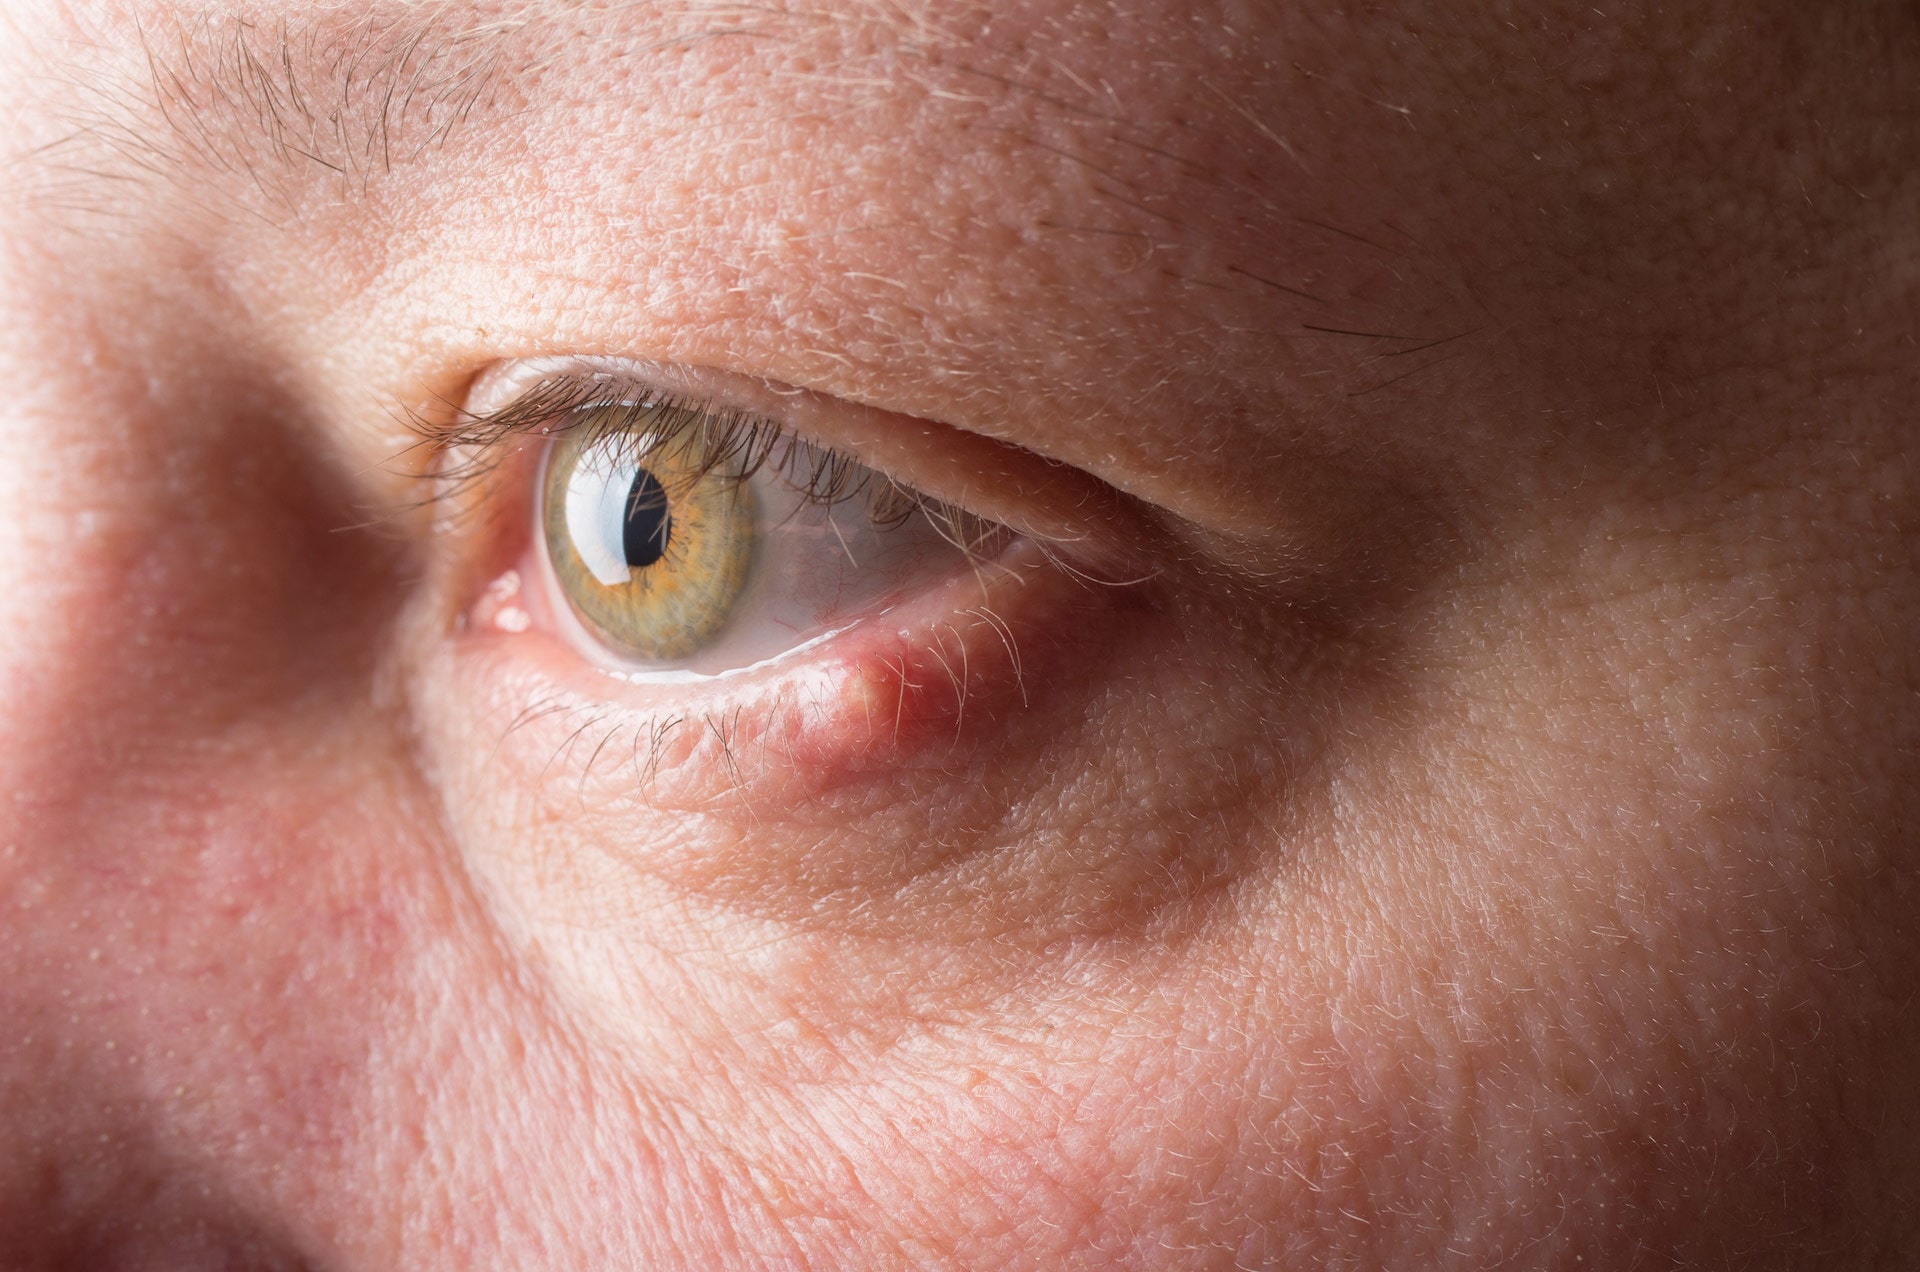 close up image of a man's eye